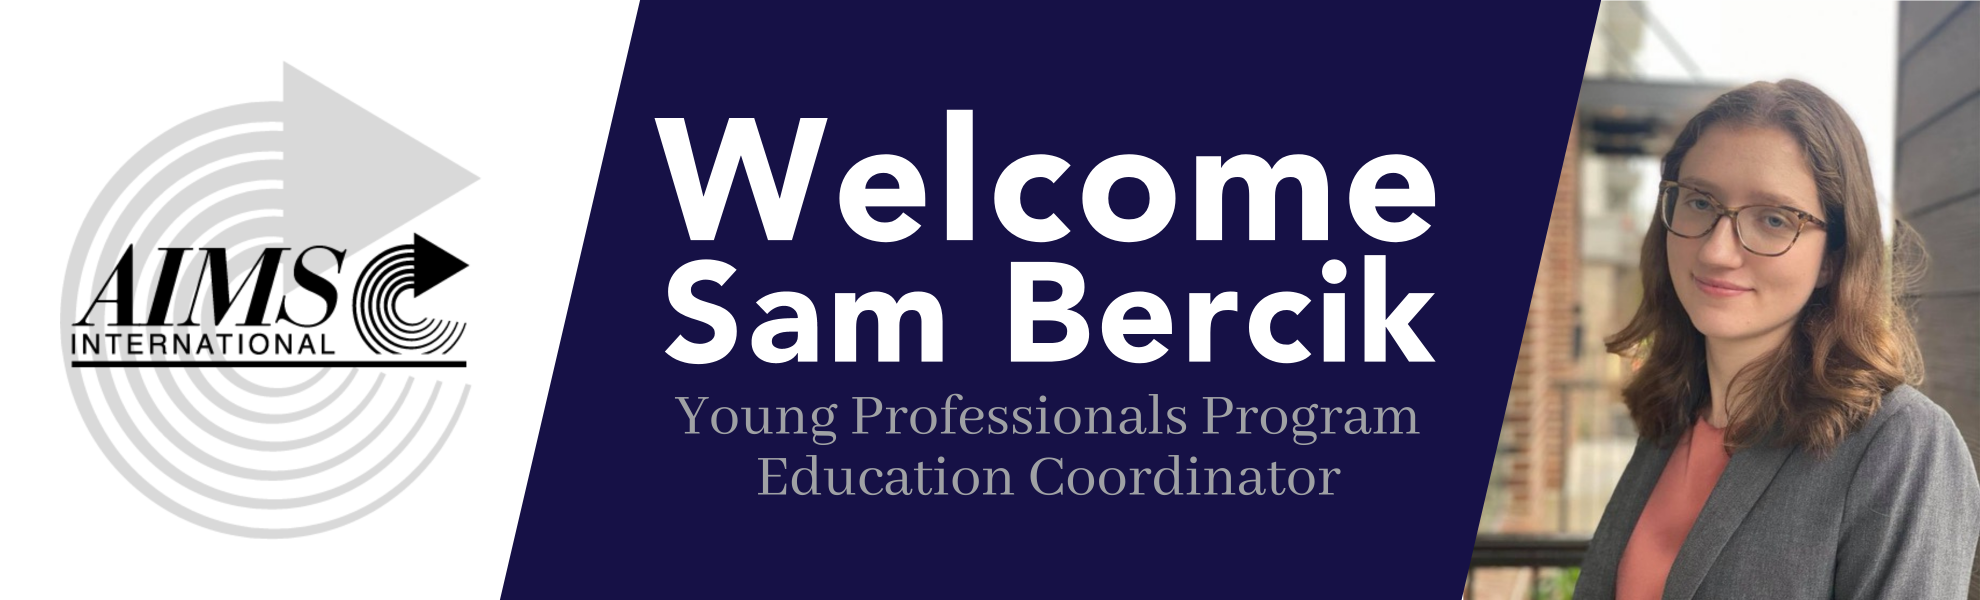 Welcome Sam Bercik